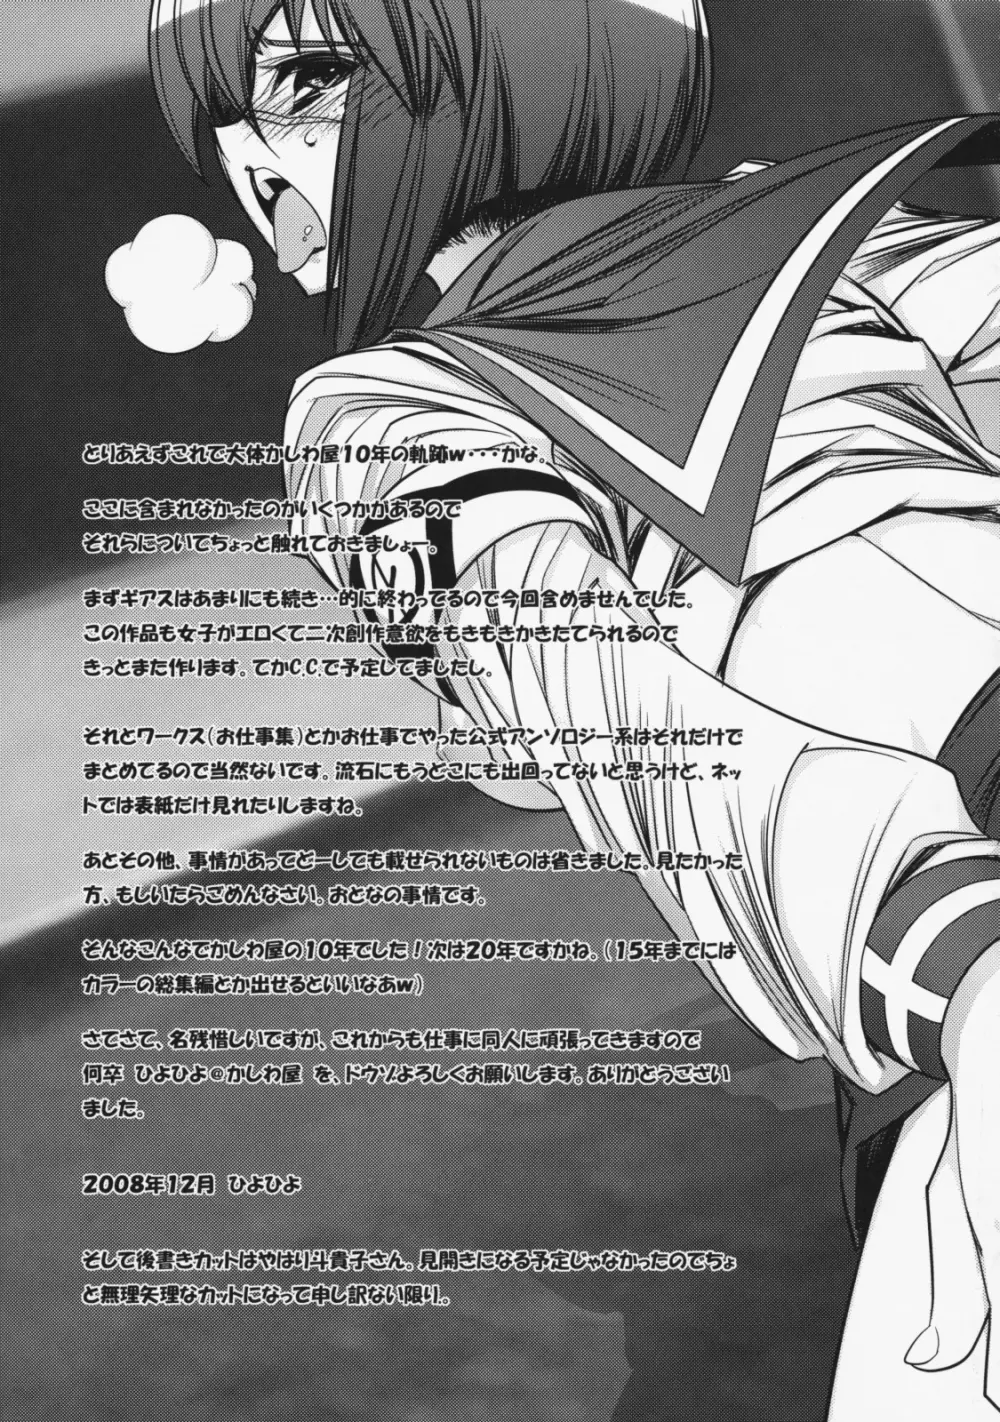 Kashiwa-ya Circle 10th Anniversary - page177